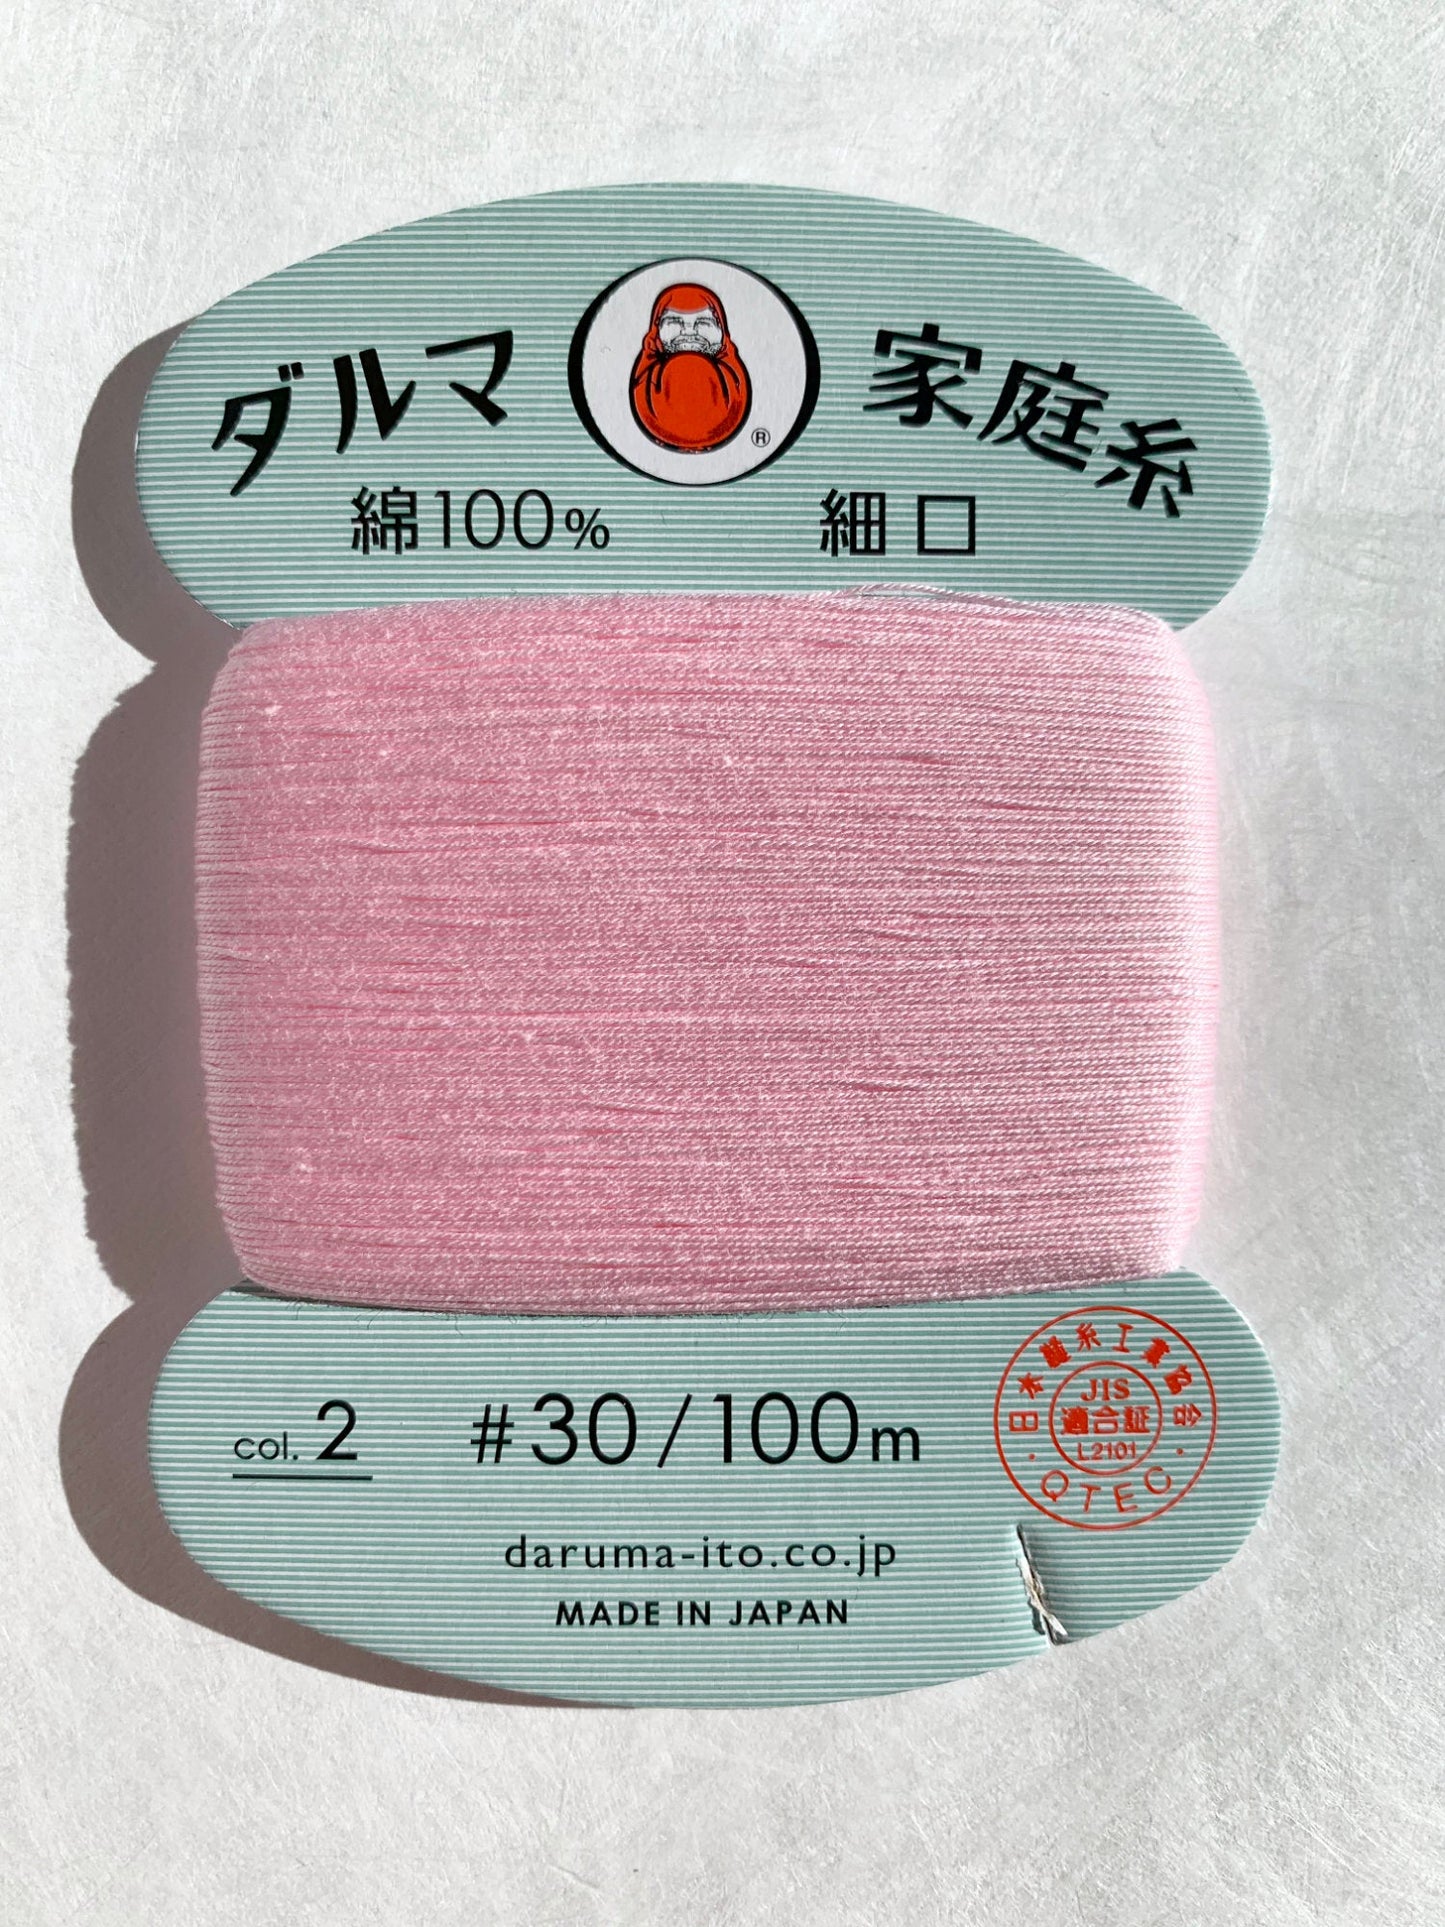 Daruma Home Thread Color #2 Sakura Pink Hand Sewing Japanese Cotton 100 meter skein size #30